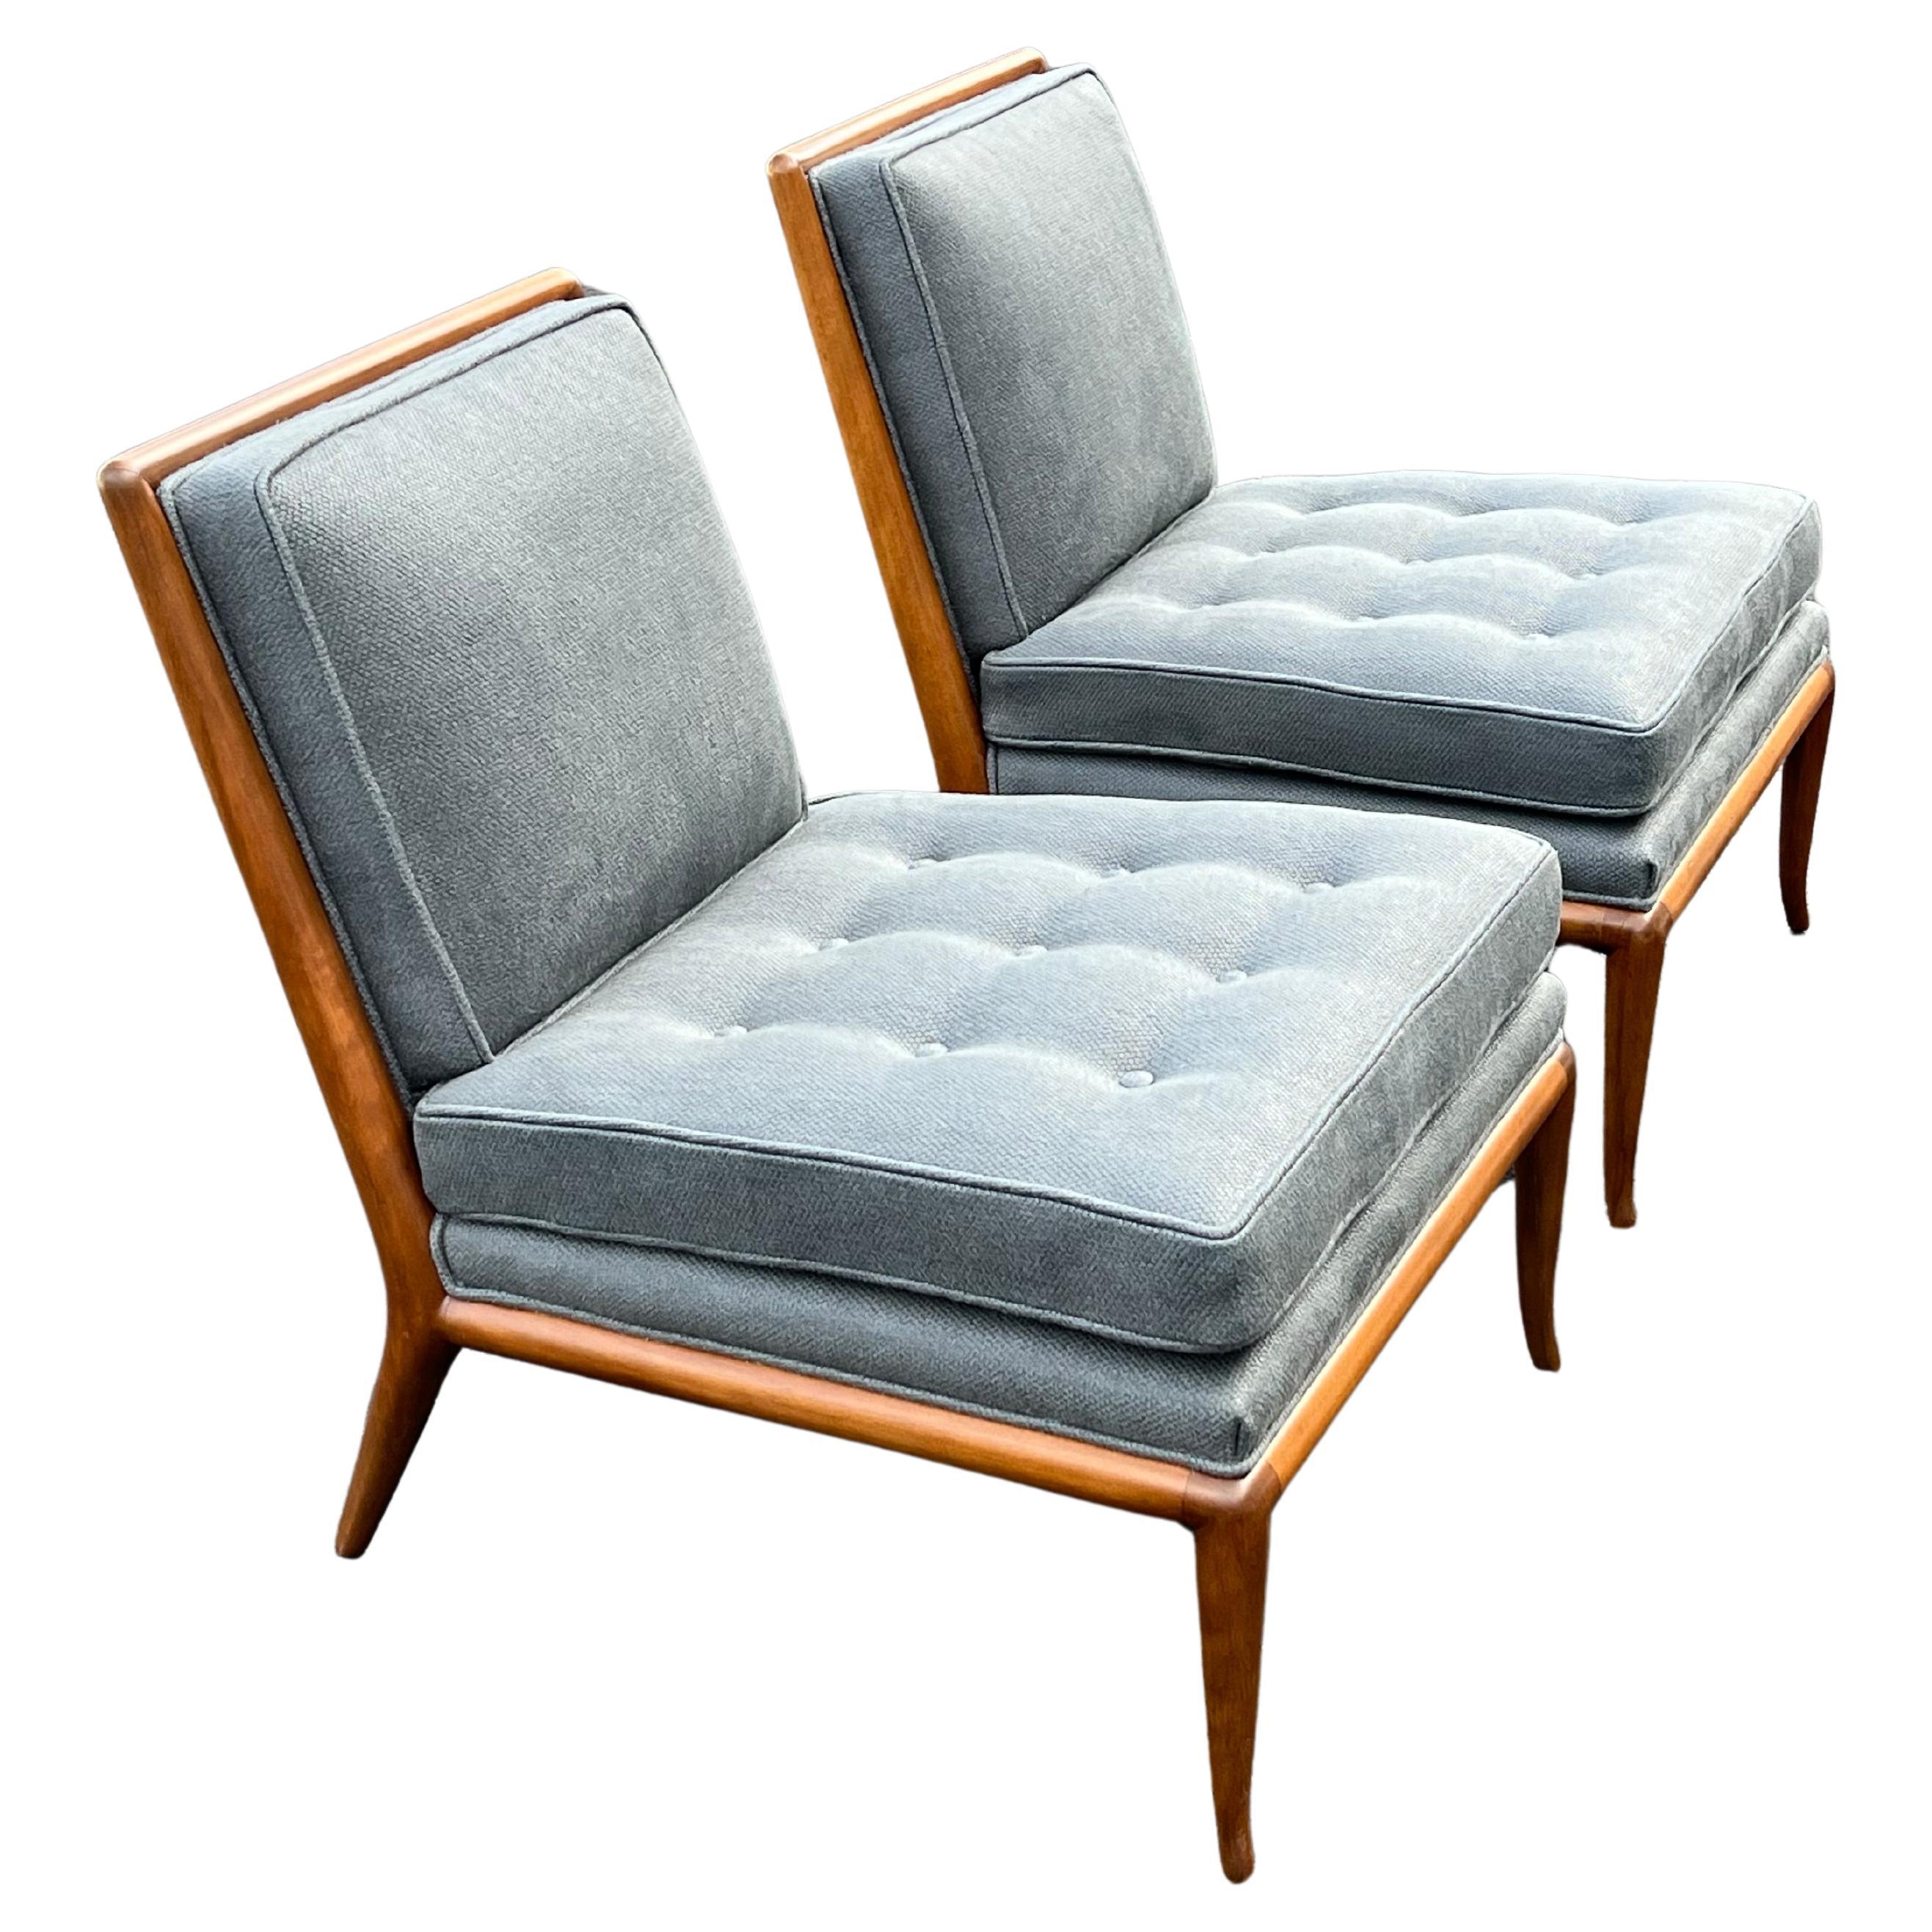 A Pair of T.H. Robsjohn-Gibbings Classic Slipper Chairs